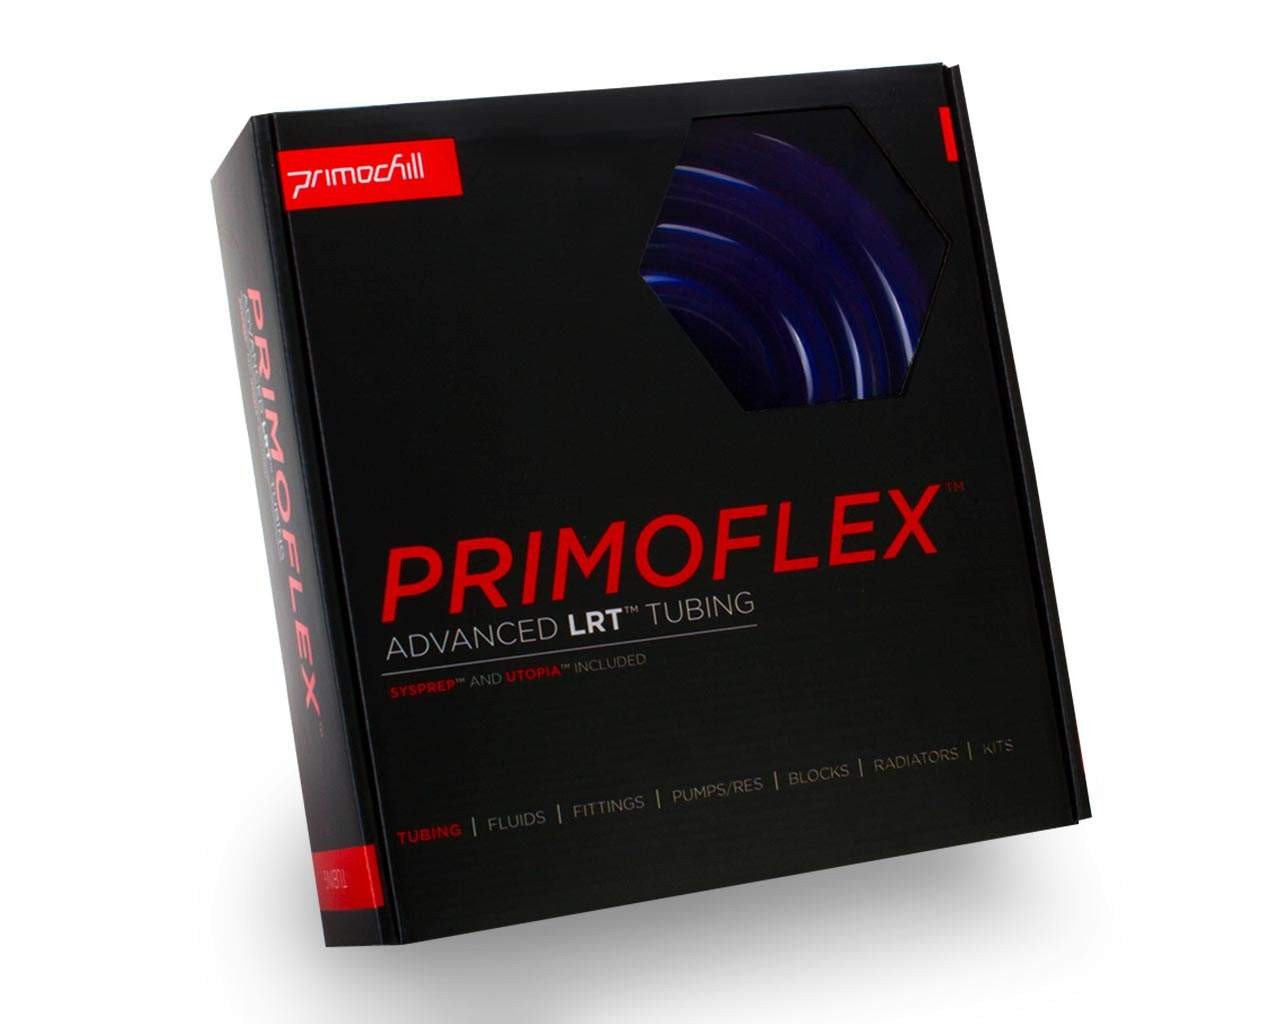 PrimoFlex Advanced LRT Soft Flexible Tubing - 7/16in.ID x 5/8in.OD, 10 feet - PrimoChill - KEEPING IT COOL Brilliant UV Blue